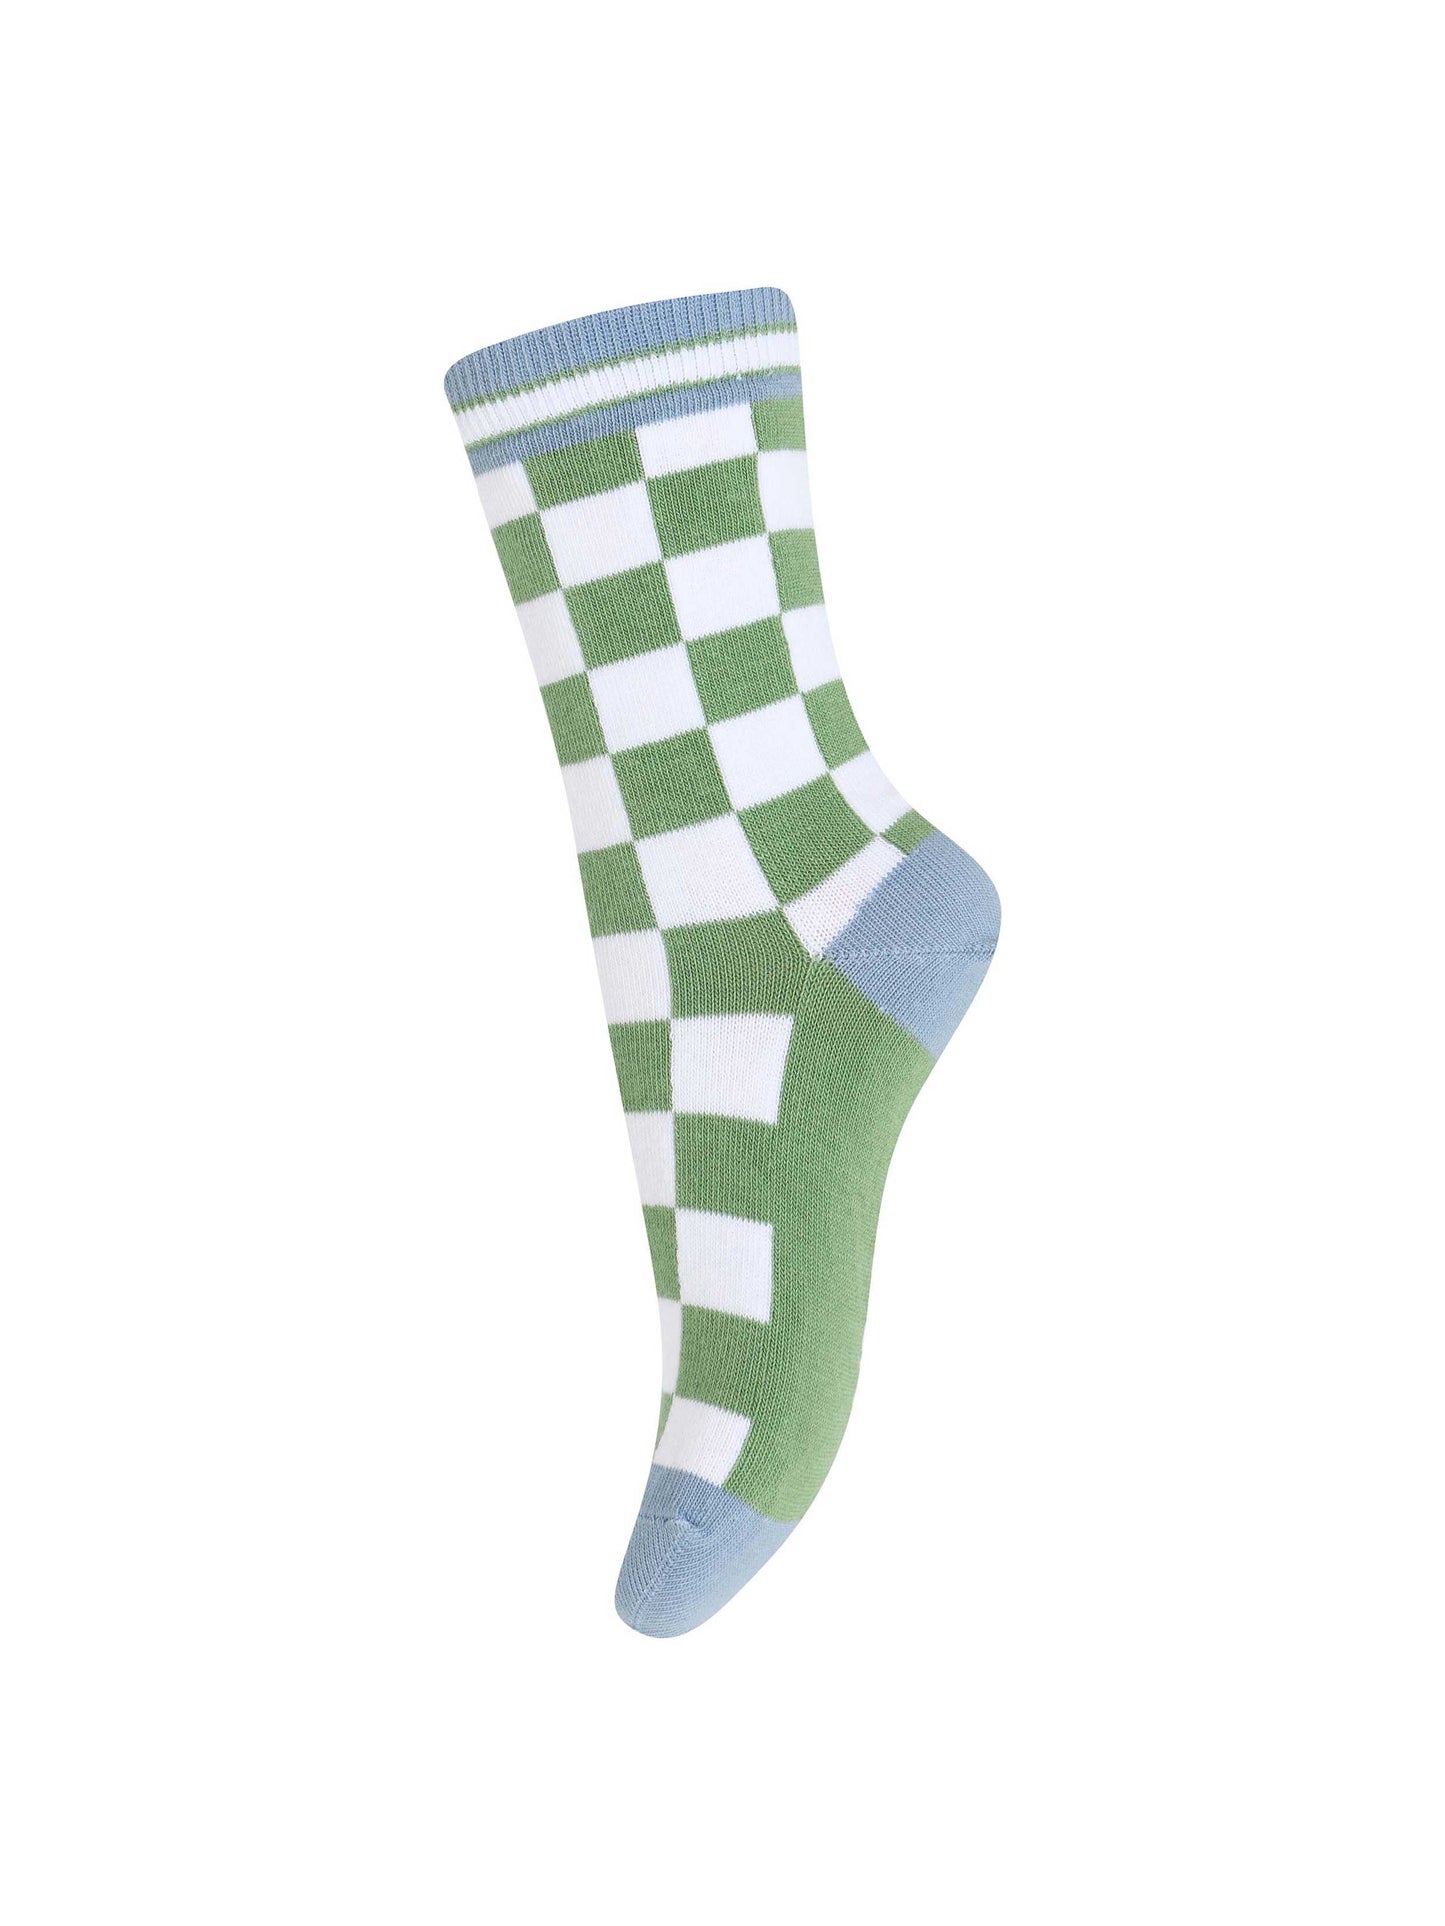 Watercress Race Socks